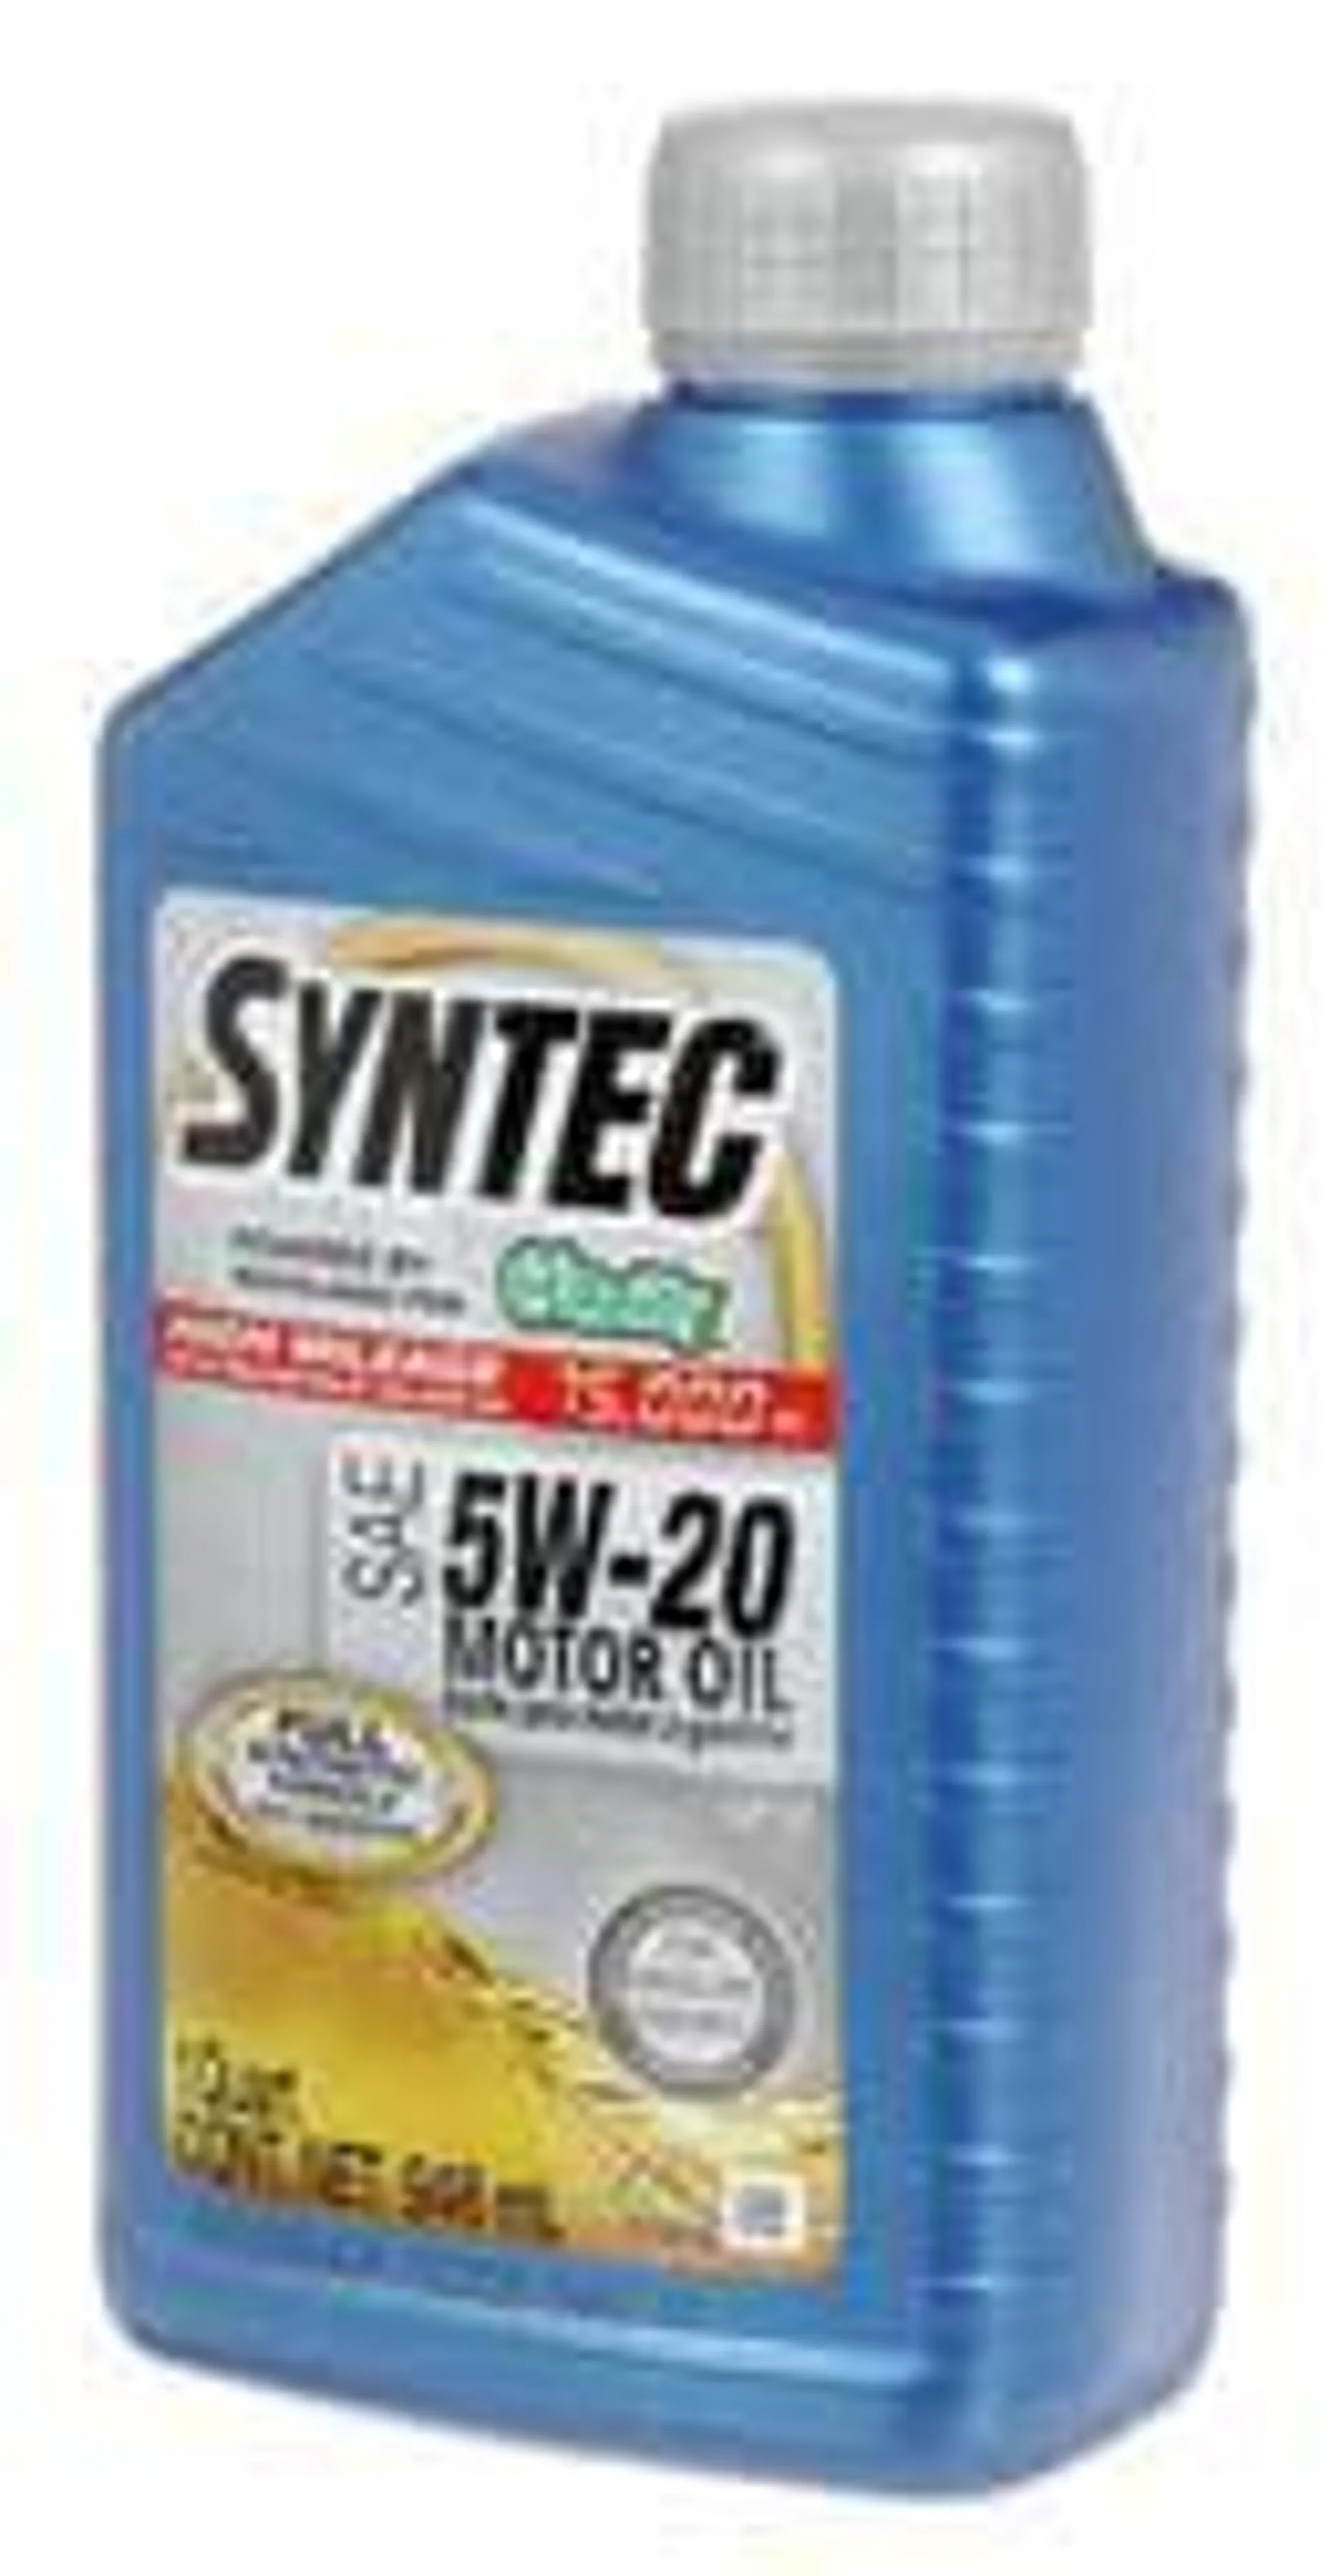 SYNTEC Full Synthetic High Mileage Motor Oil 5W-20 1 Quart - HI-SYN5-20